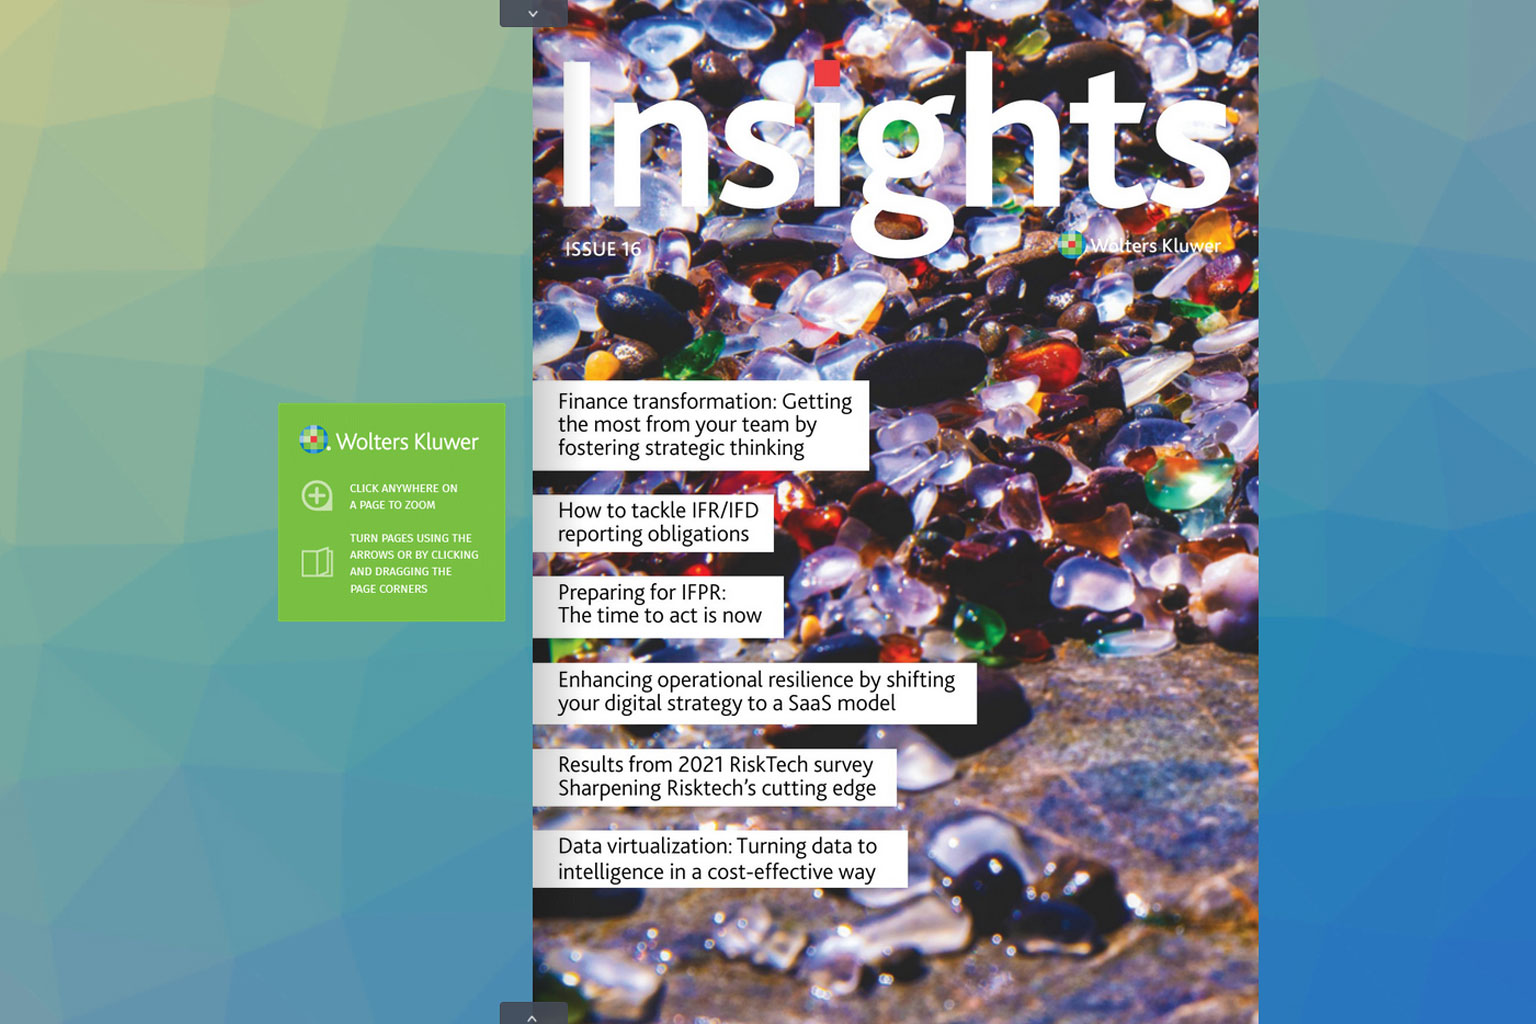 Insights-Magazine-Issue-16